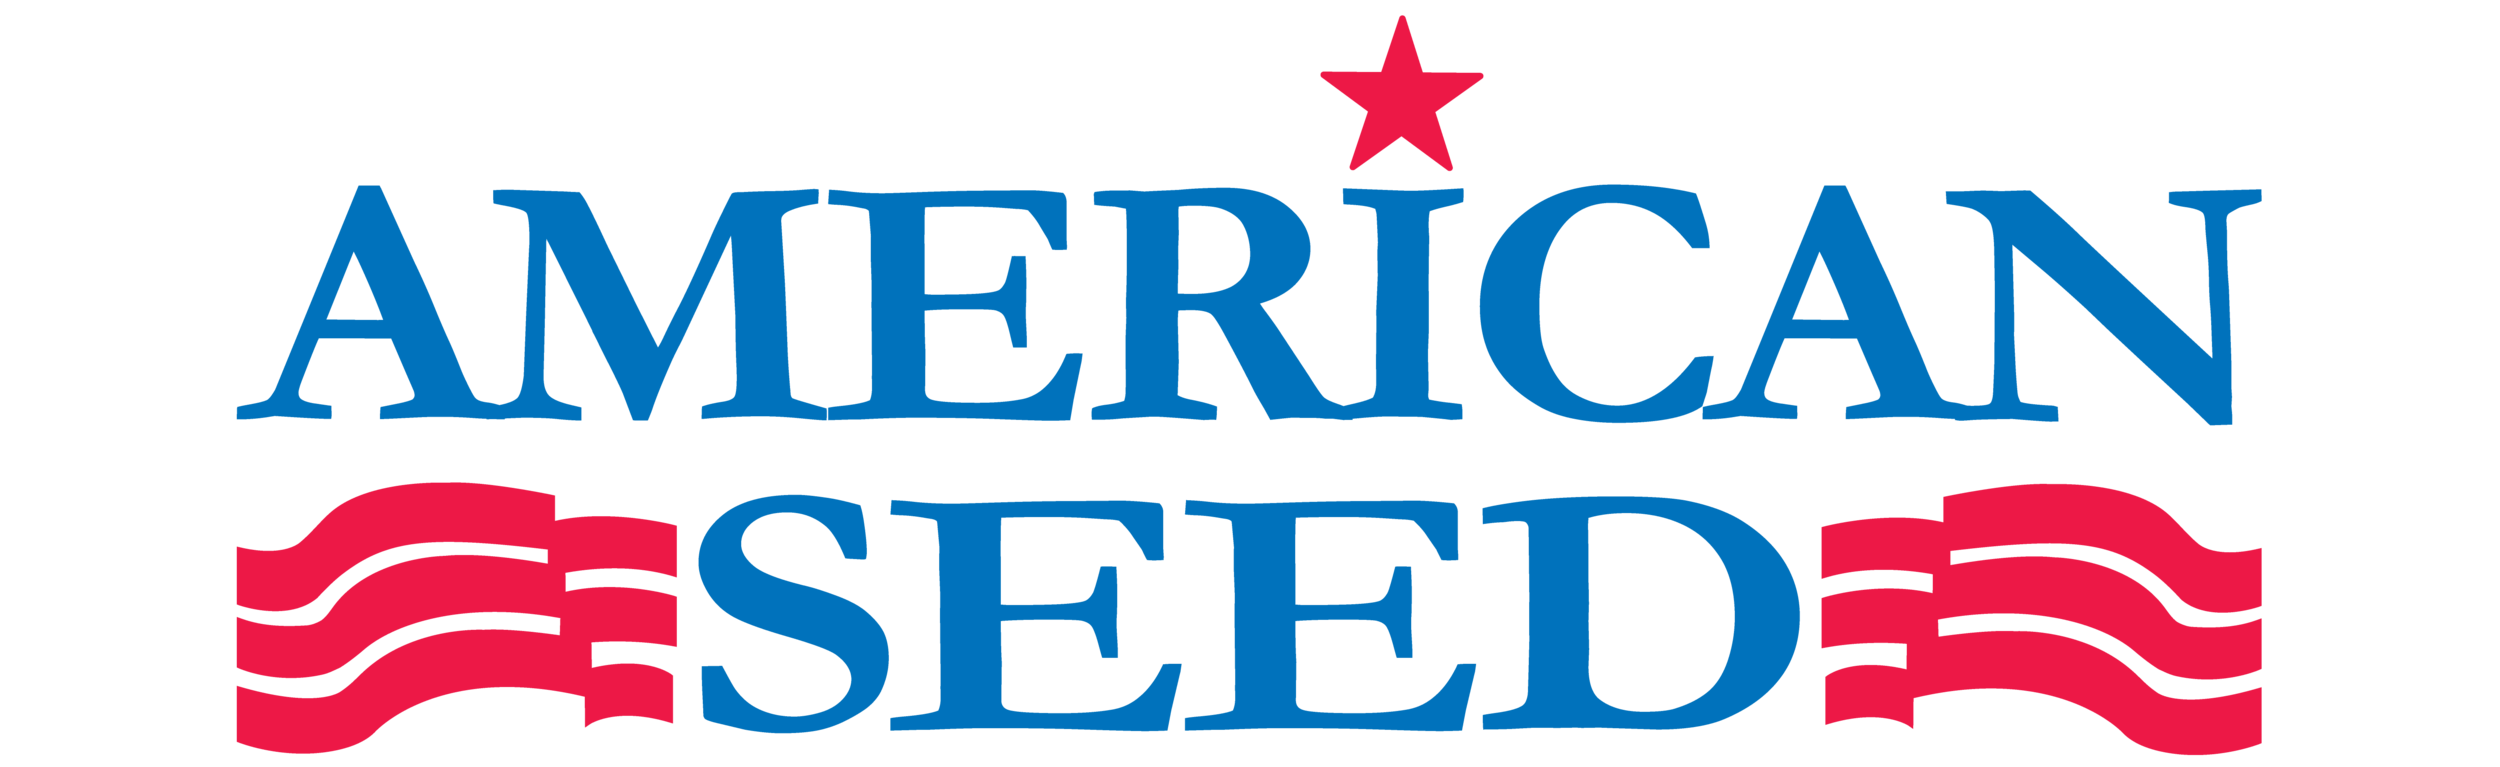 American Seed brand